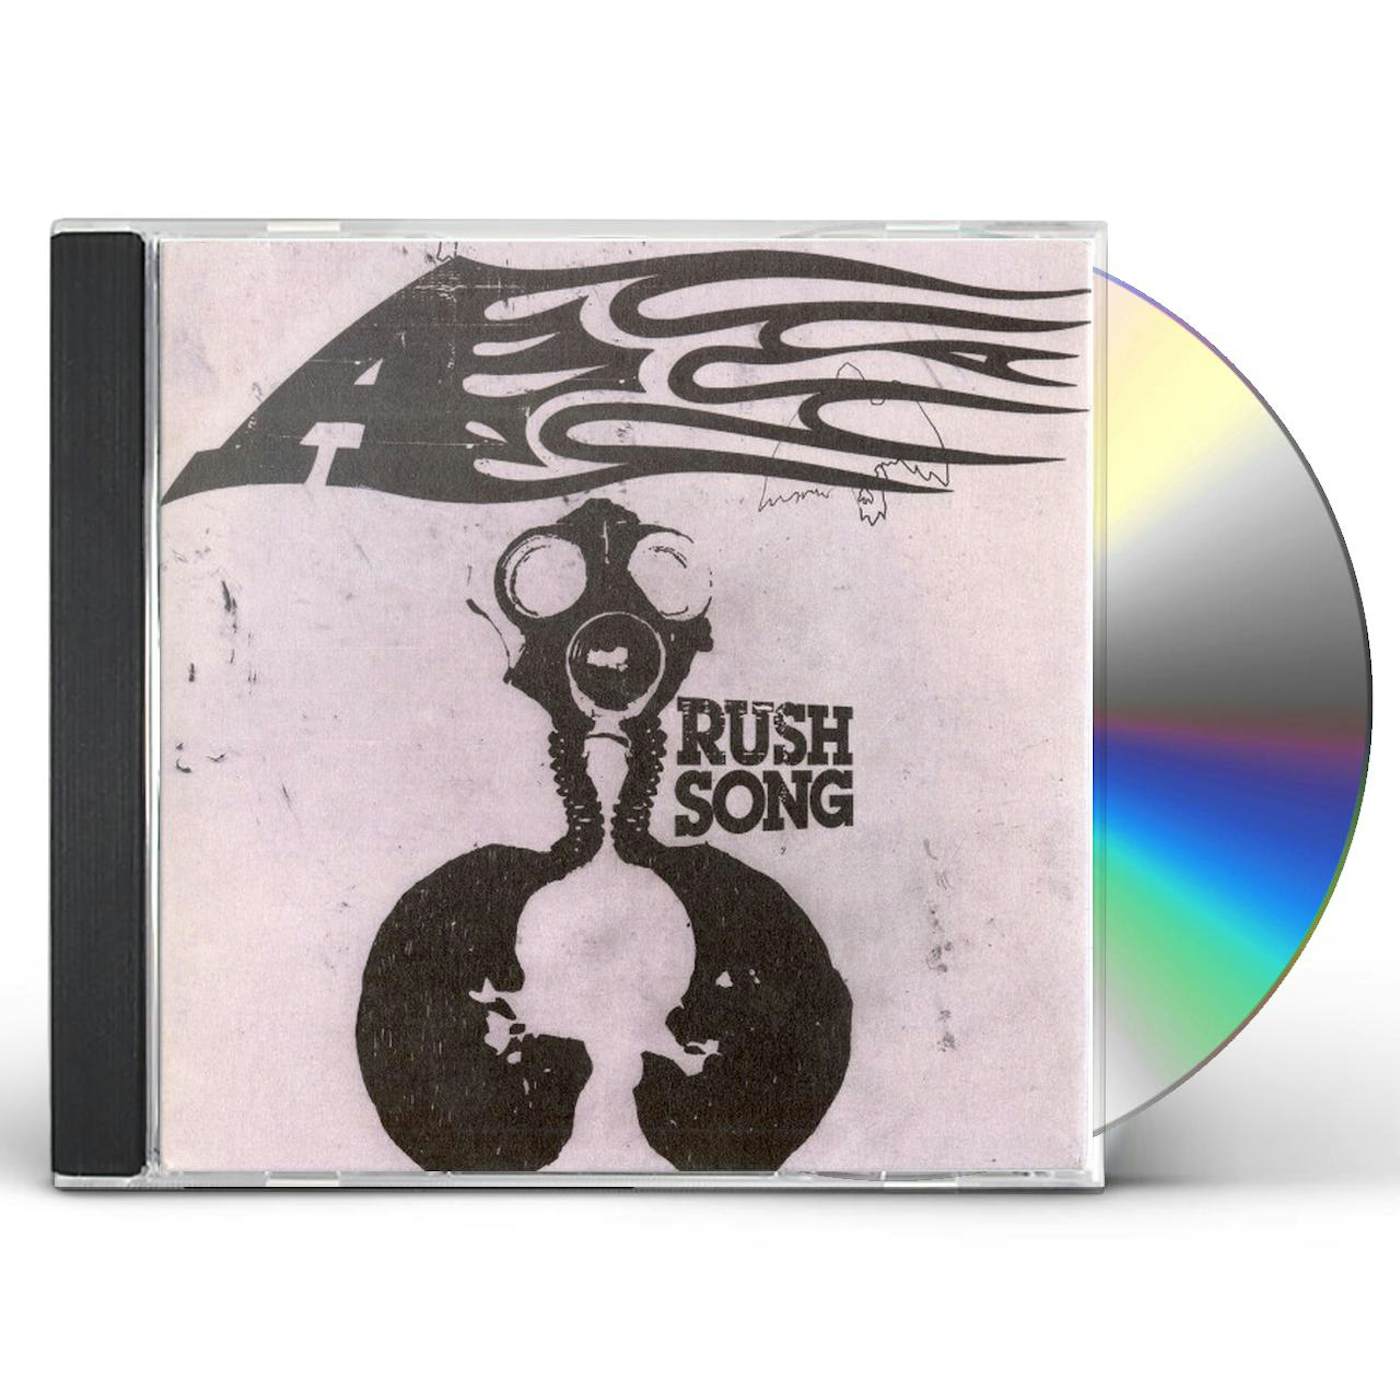 A. Rush Song Vinyl Record